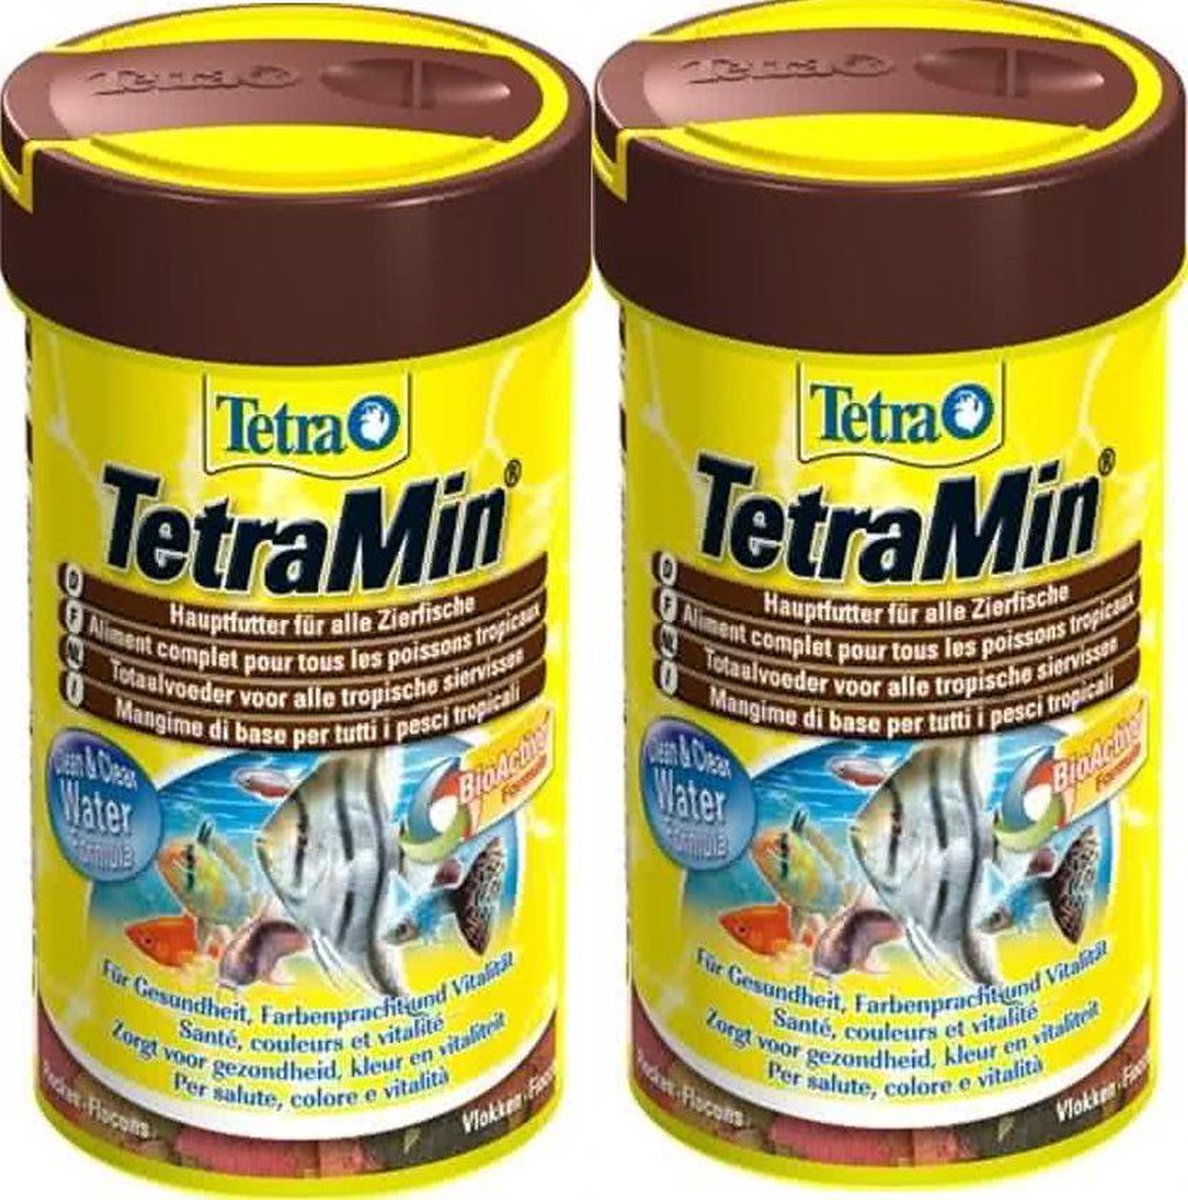 TetraMin Flakes 250ml